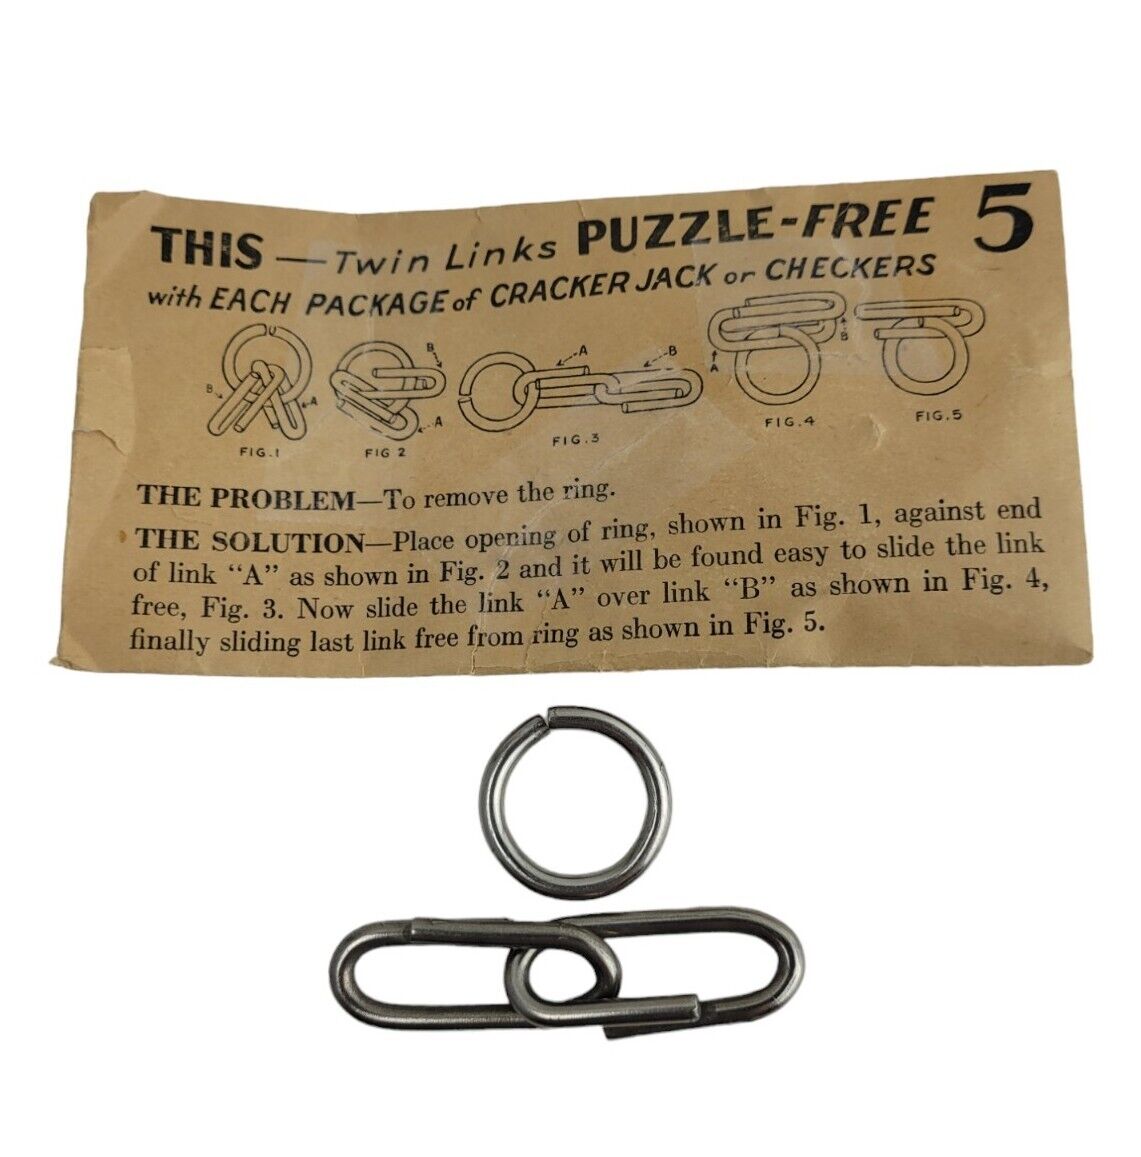 1930s CRACKER JACK PRIZE TWIN LINKS PUZZLE No 5 WITH ORIGINAL ENVELOPE